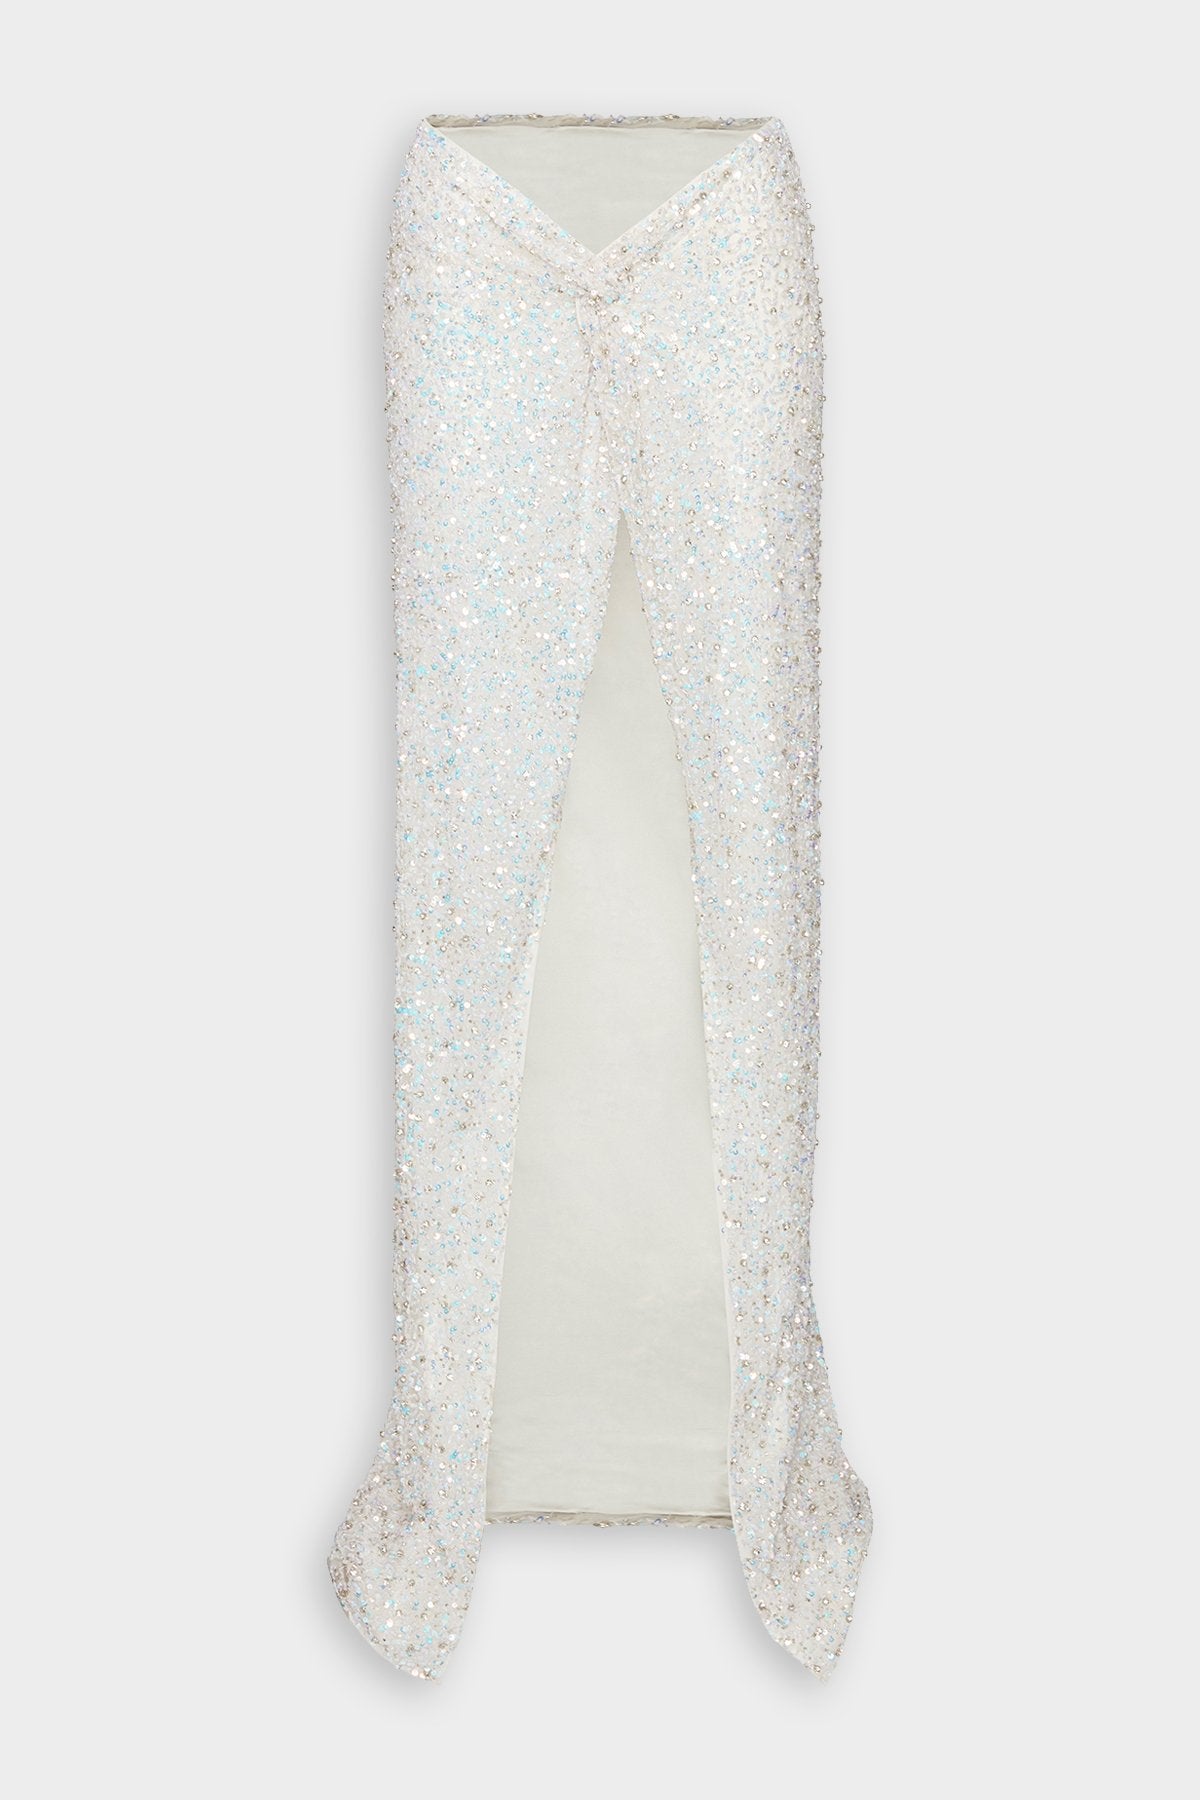 Portina Skirt in Iridescent White - shop-olivia.com